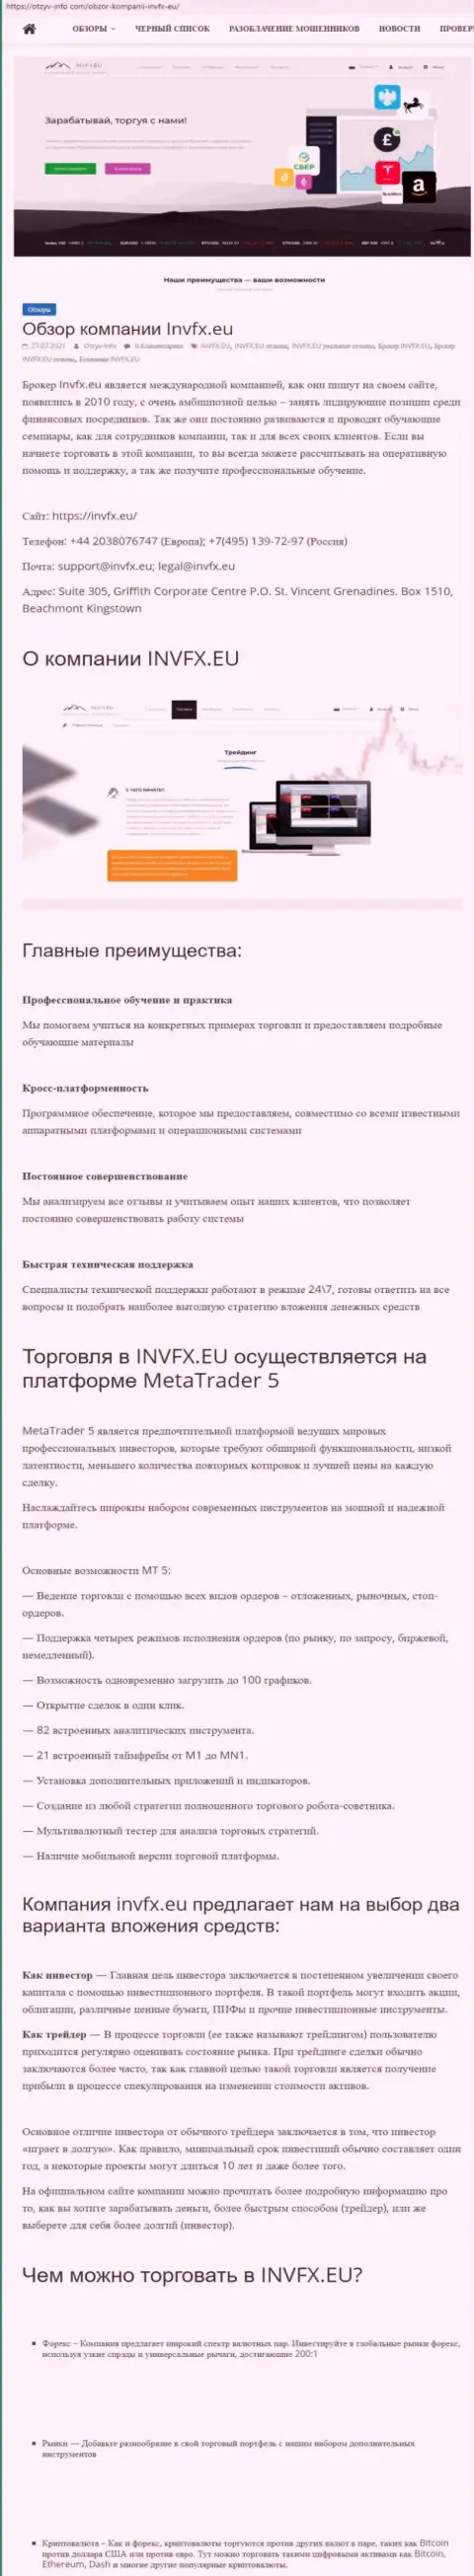 Web-сервис otzyv-info com разместил статью о Форекс-дилинговом центре INVFX Eu